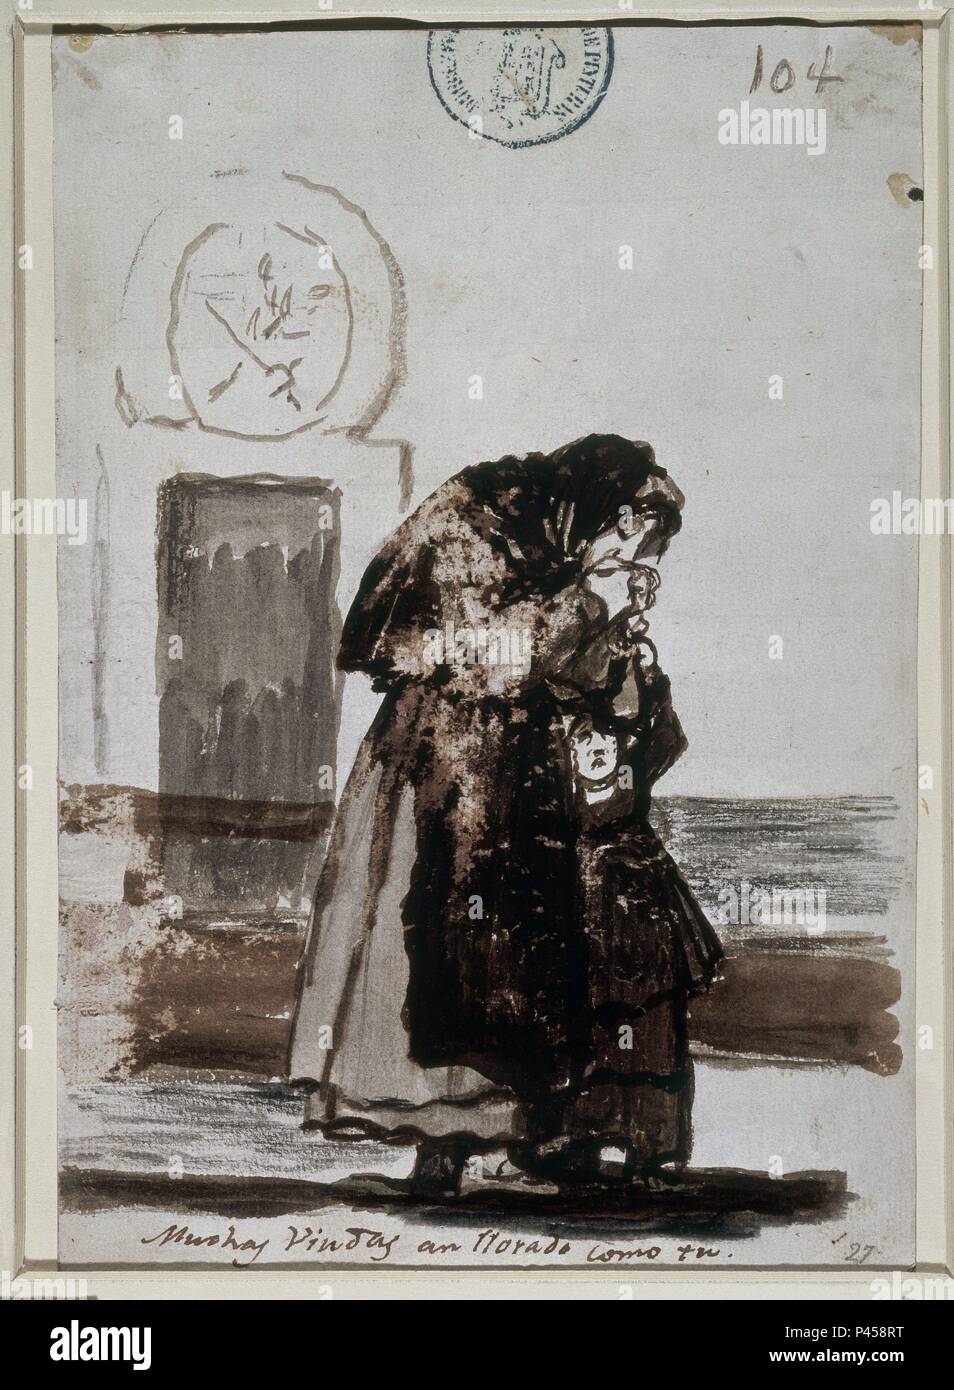 HAN VIUDAS MUCHAS LLORADO COMO TU - ALBUM C, 104 - SIGLO XIX - AGUADA-Sépia - 205x142 mm. Auteur : Francisco de Goya (1746-1828). Emplacement : Museo del Prado-DESSINS, MADRID, ESPAGNE. Banque D'Images